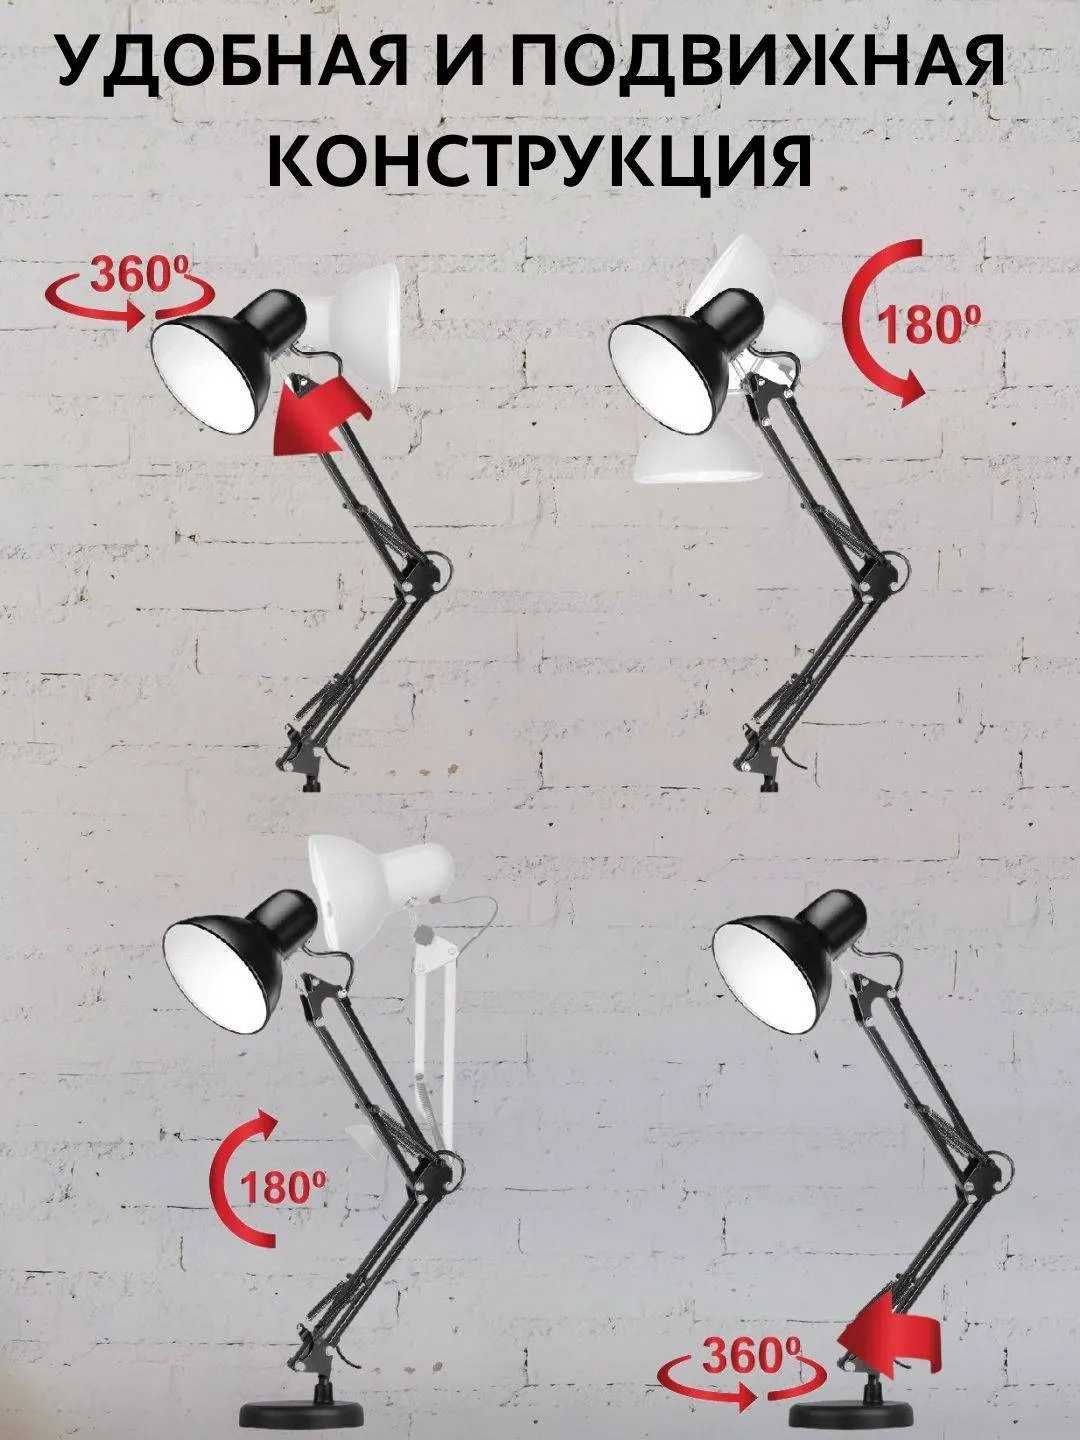 Stol metall lampa + led lampa 9w, qisqichi bilan